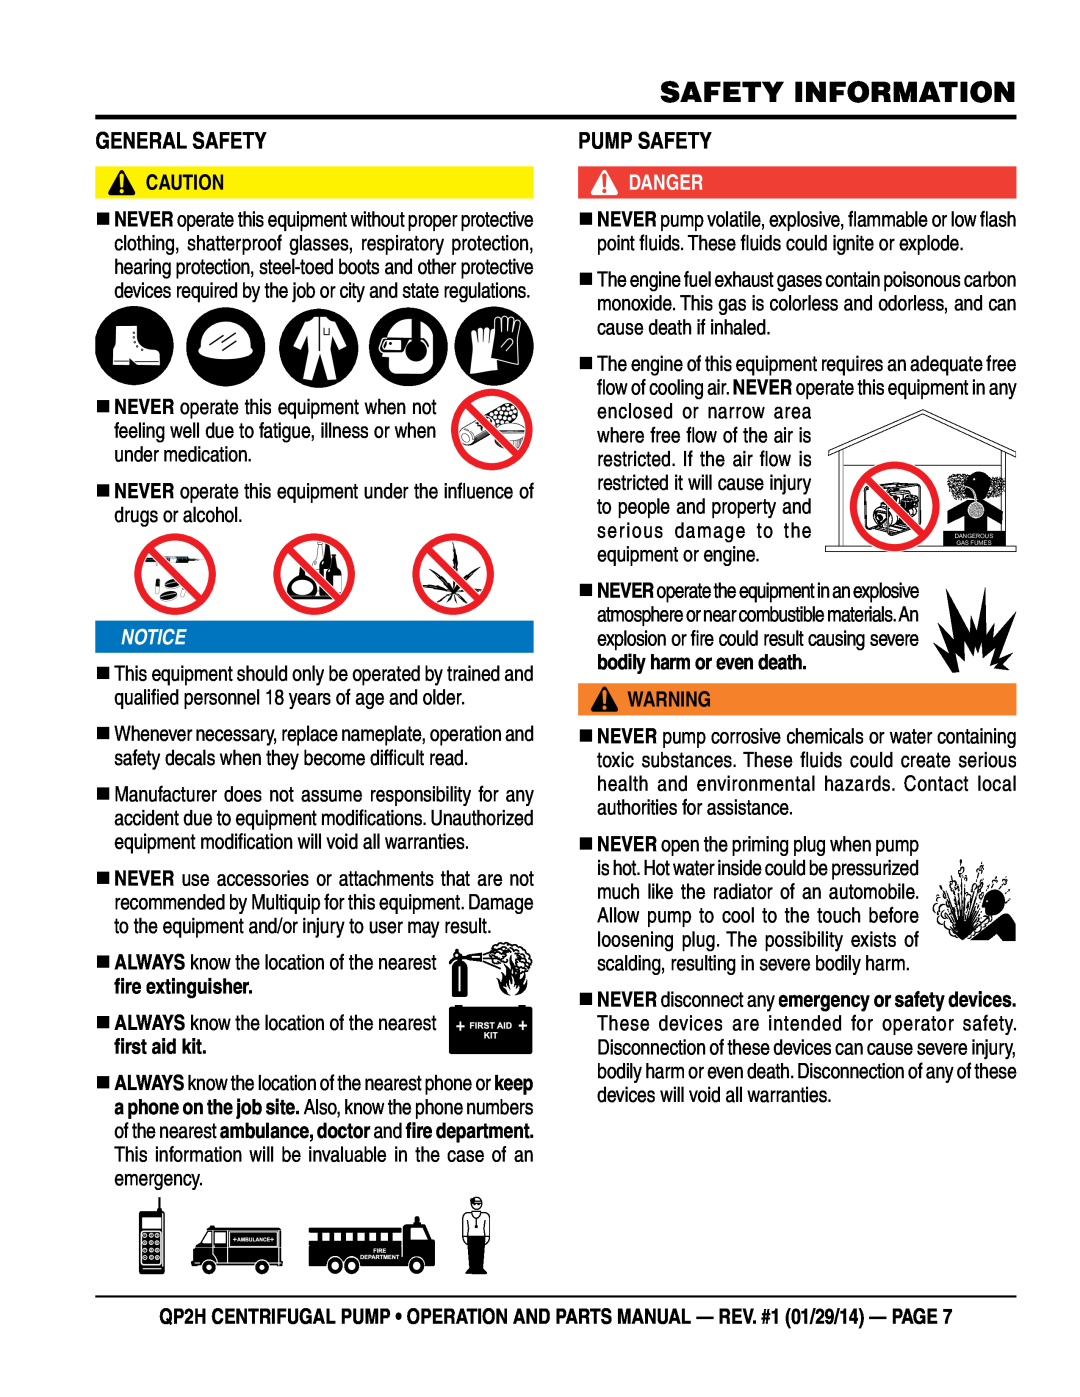 Multiquip QP2H manual General Safety, Pump Safety, Safety Information, Notice, Danger 